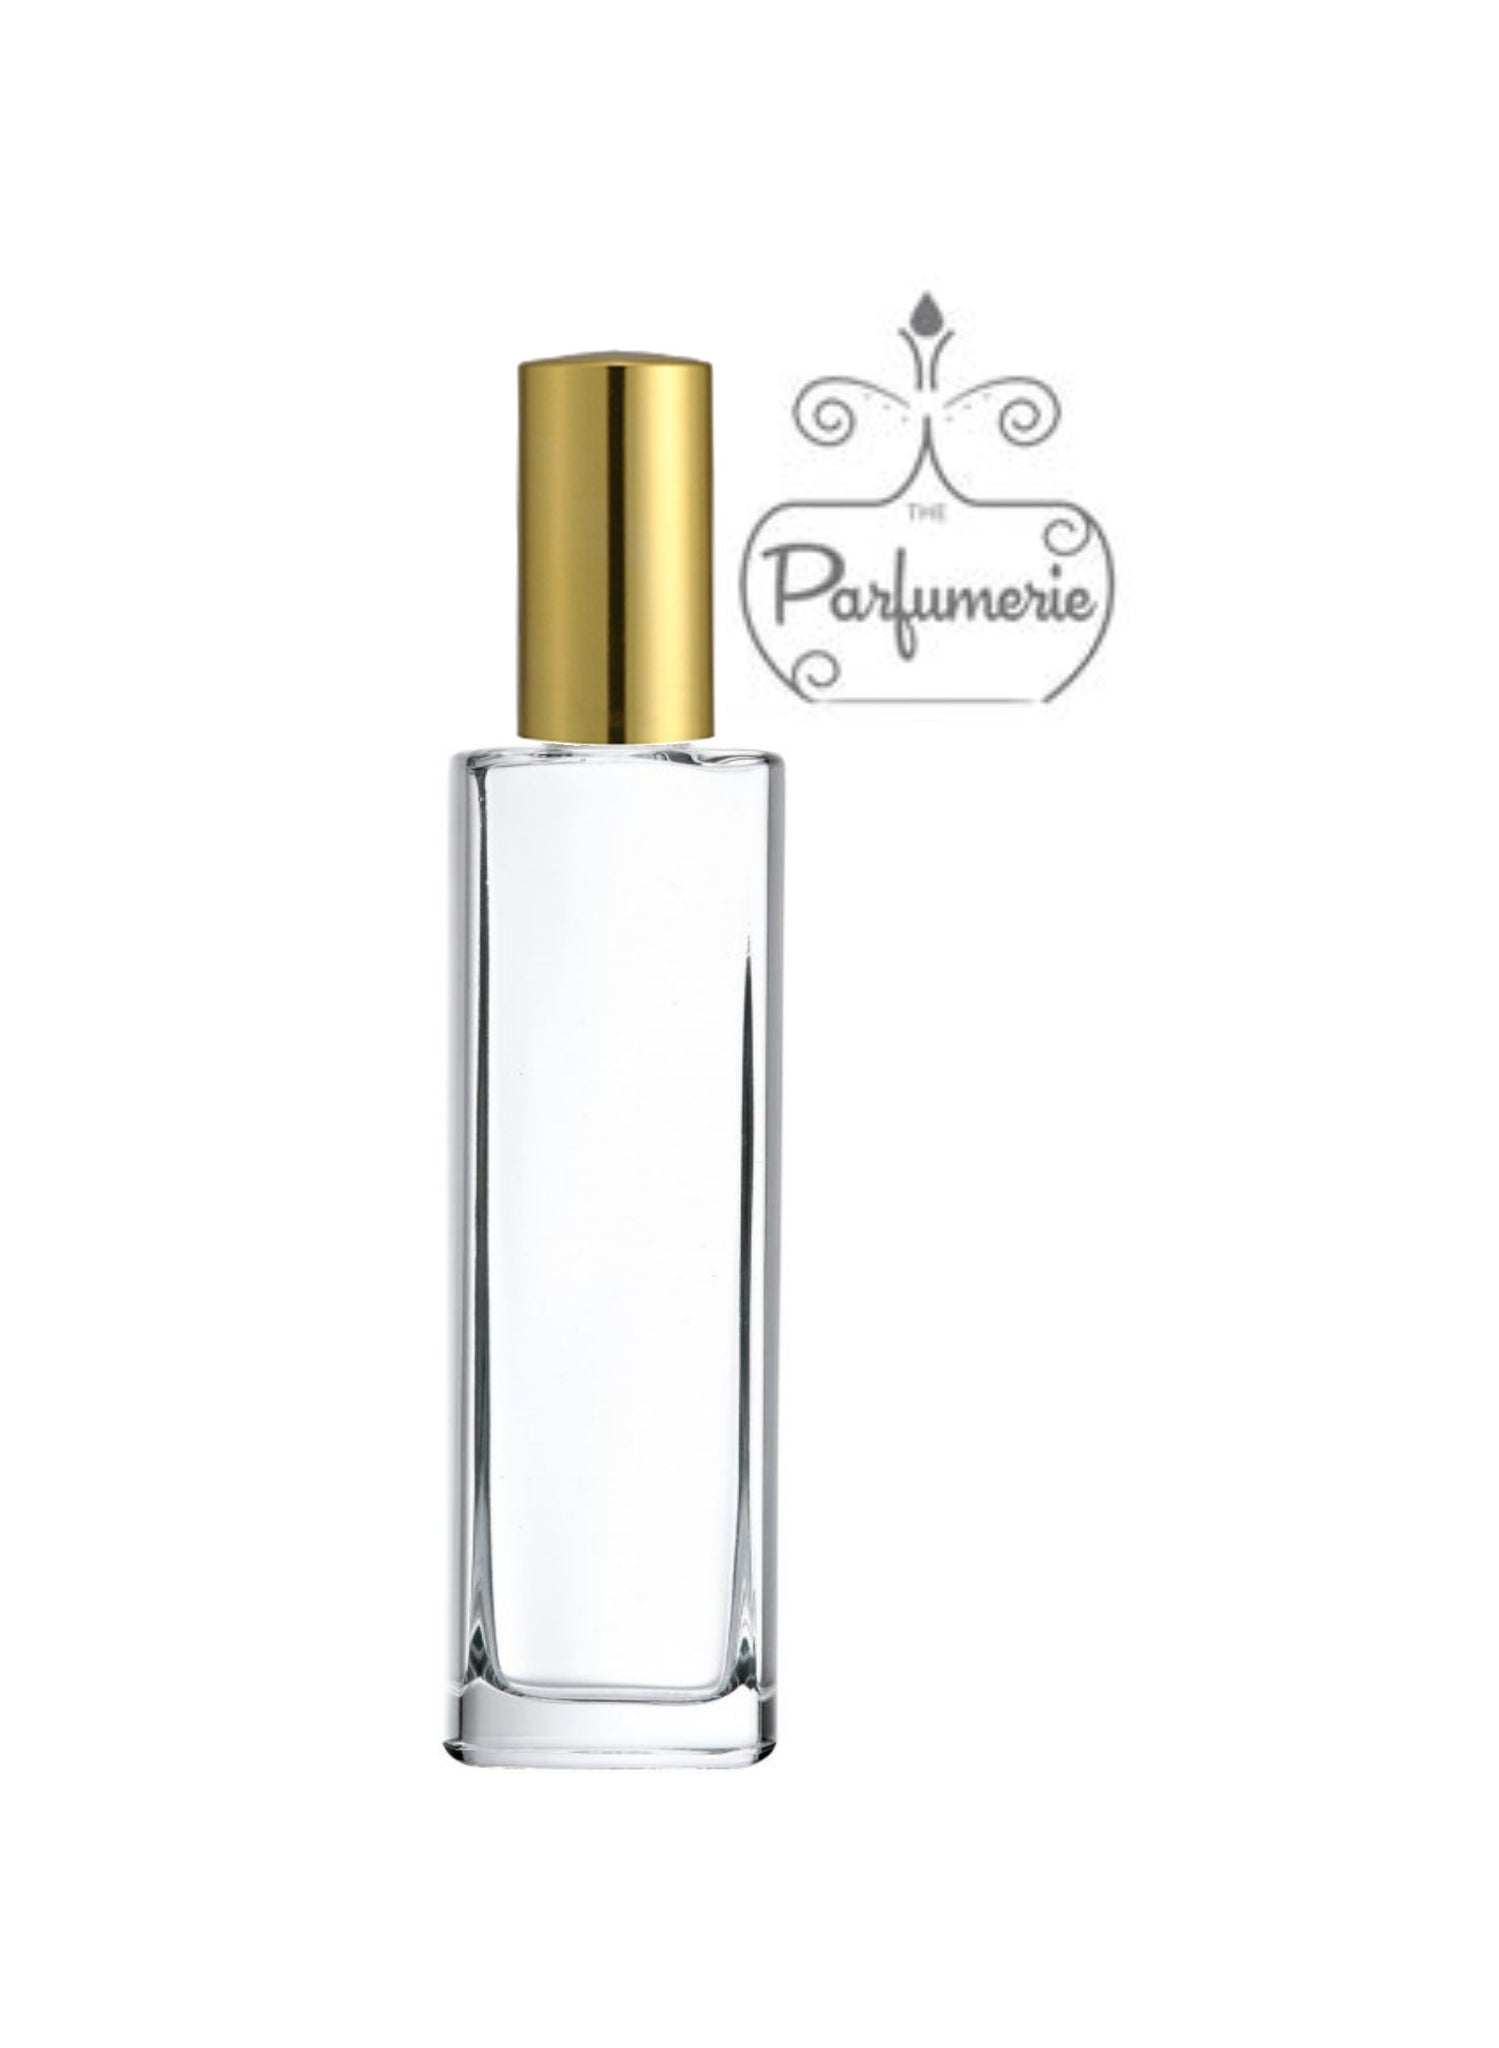 Perfume Oils and Sprays